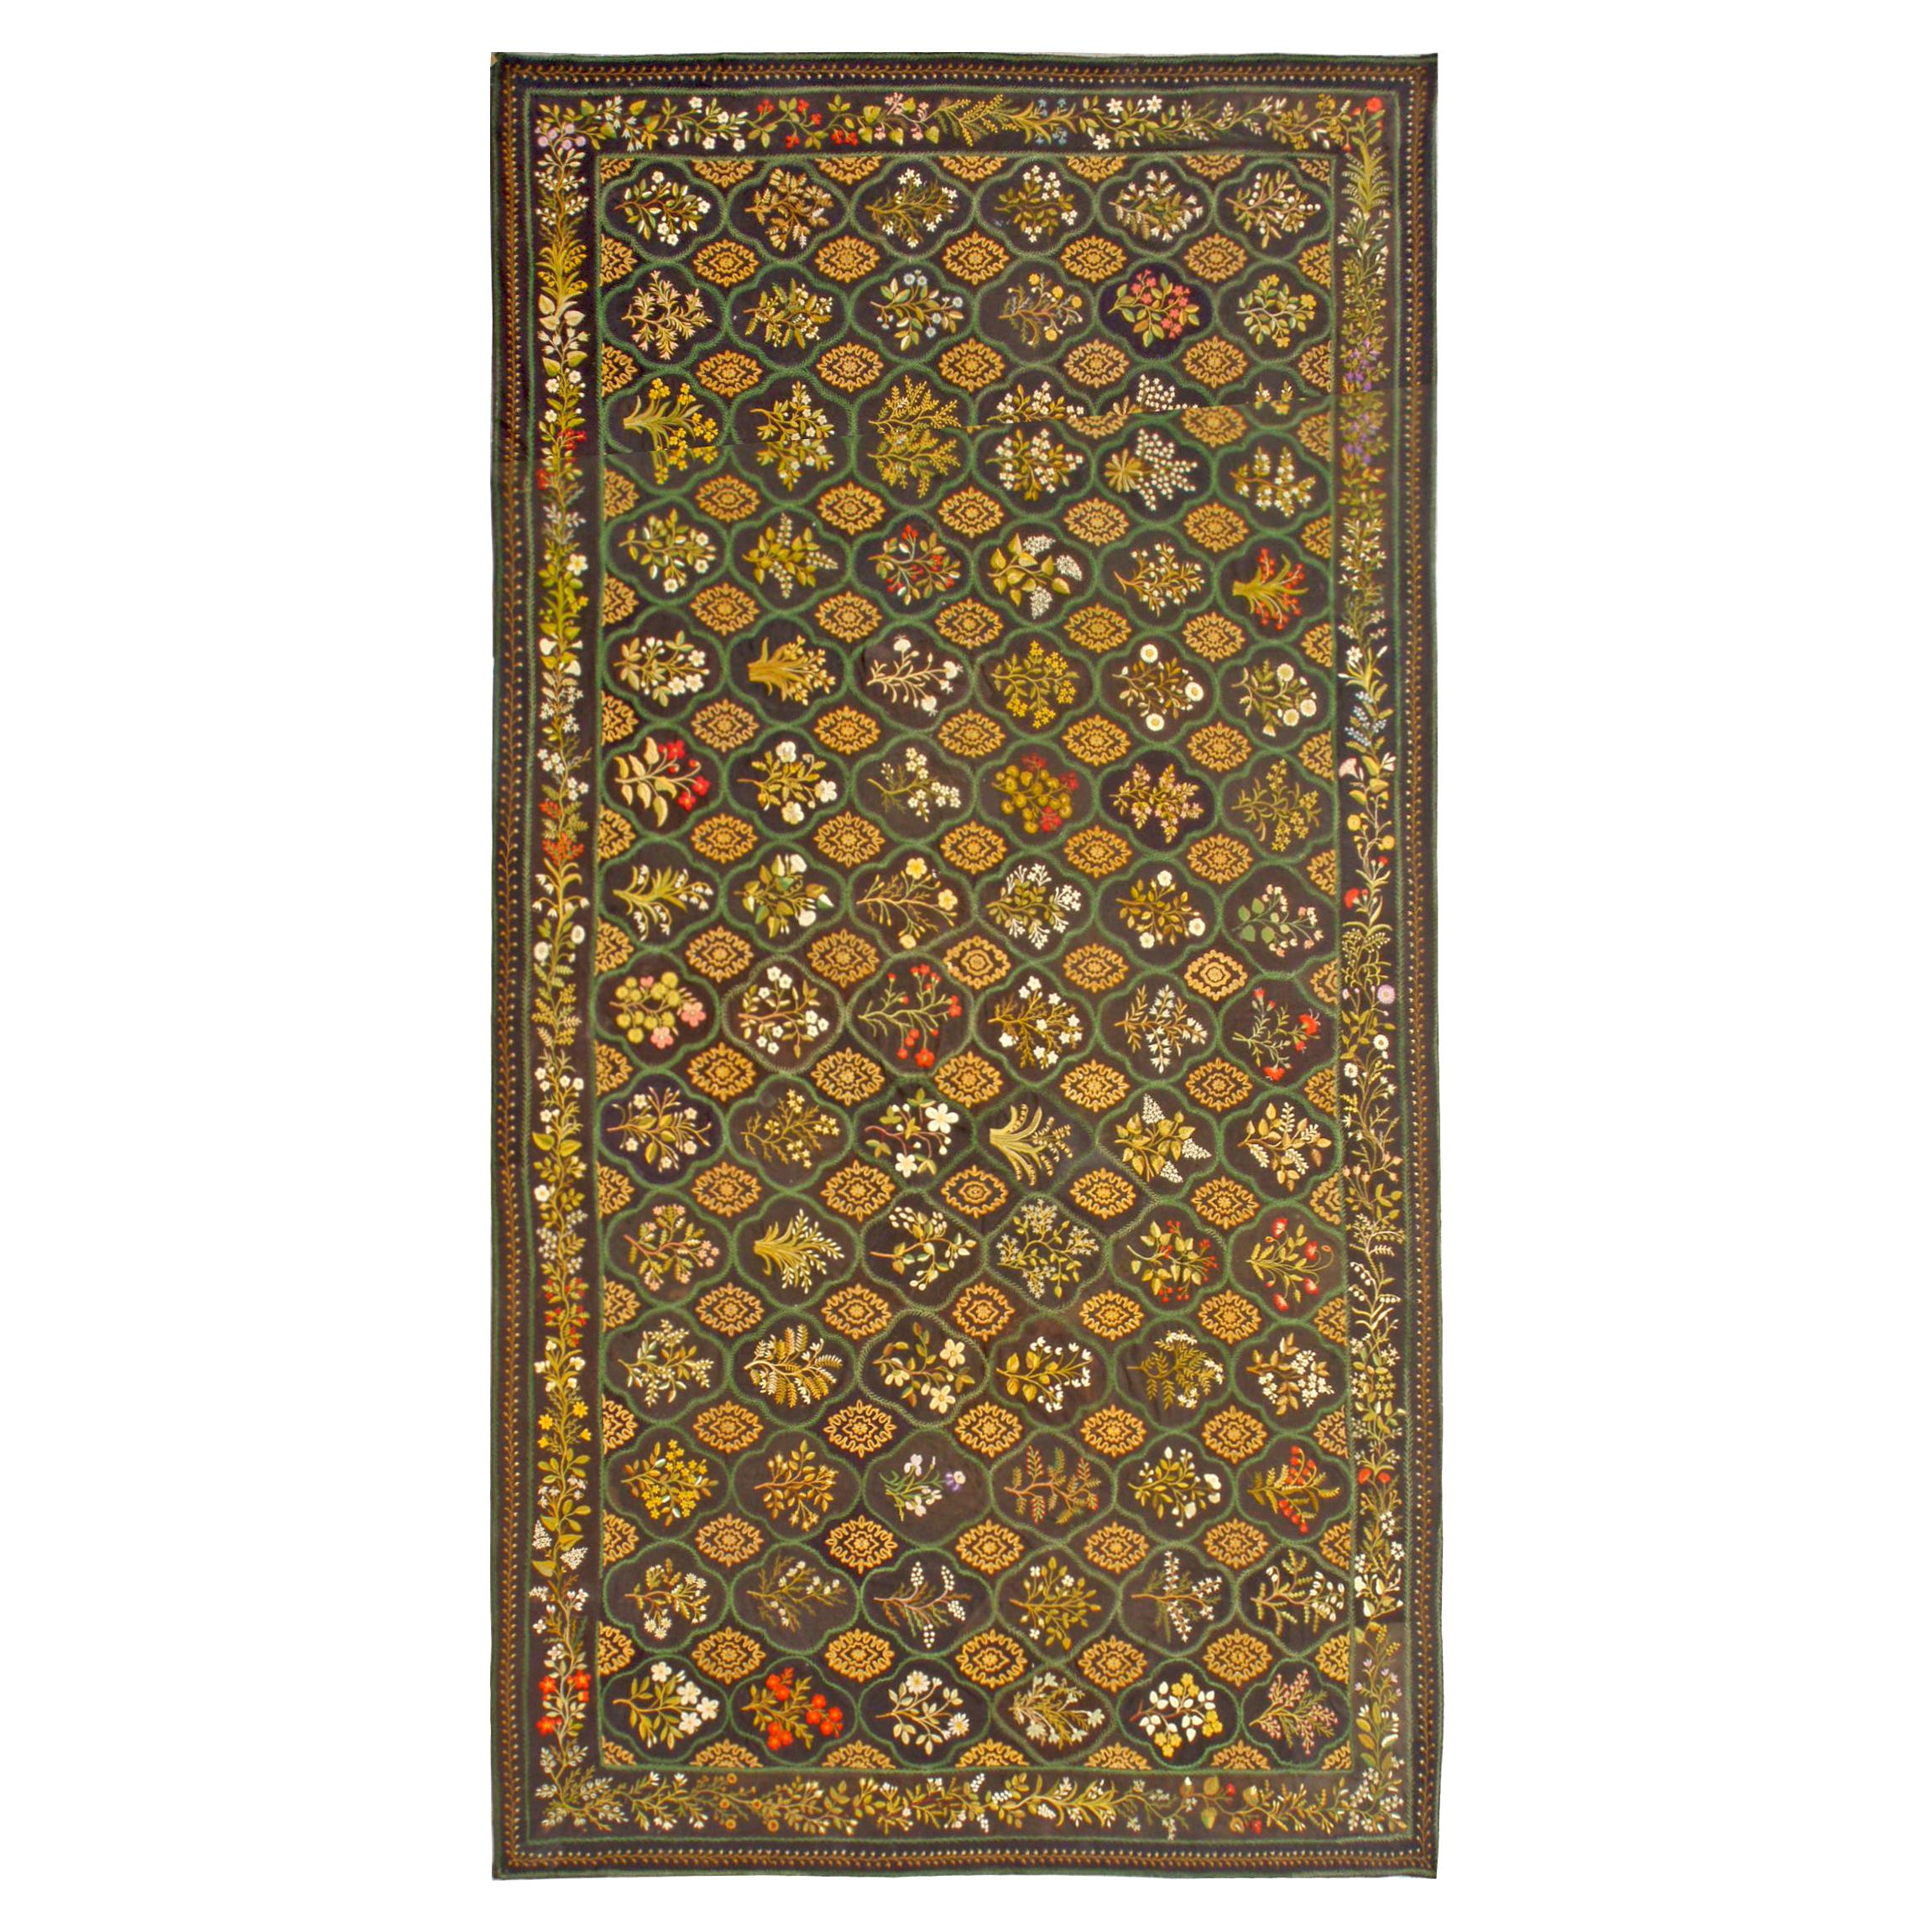 Antique English Needlework Carpet: 10'6